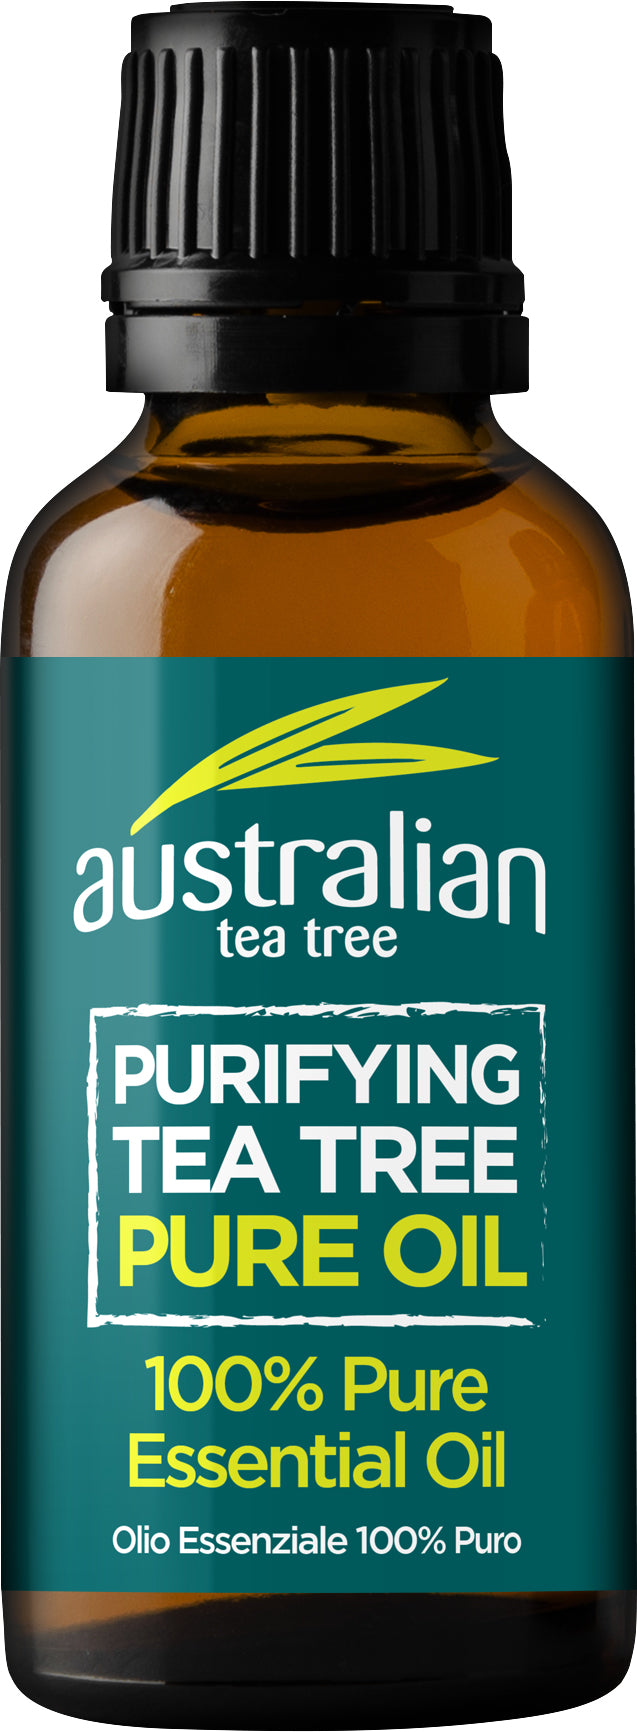 Australian Tea Tree Purifying Tea Tree Pure Oil 10ml